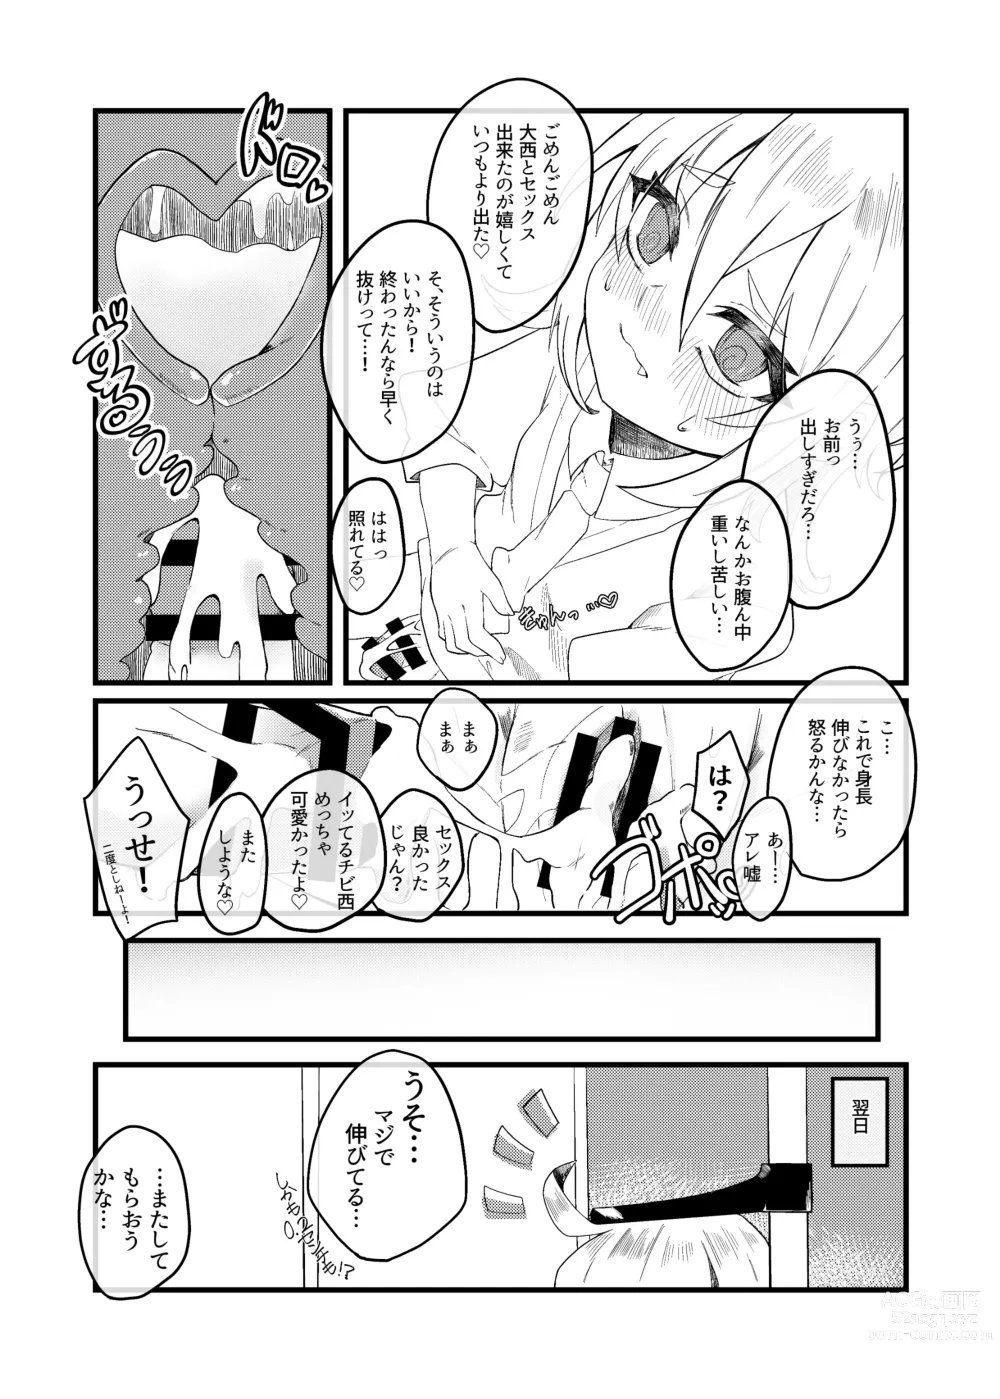 Page 40 of doujinshi Konishi to Onishi